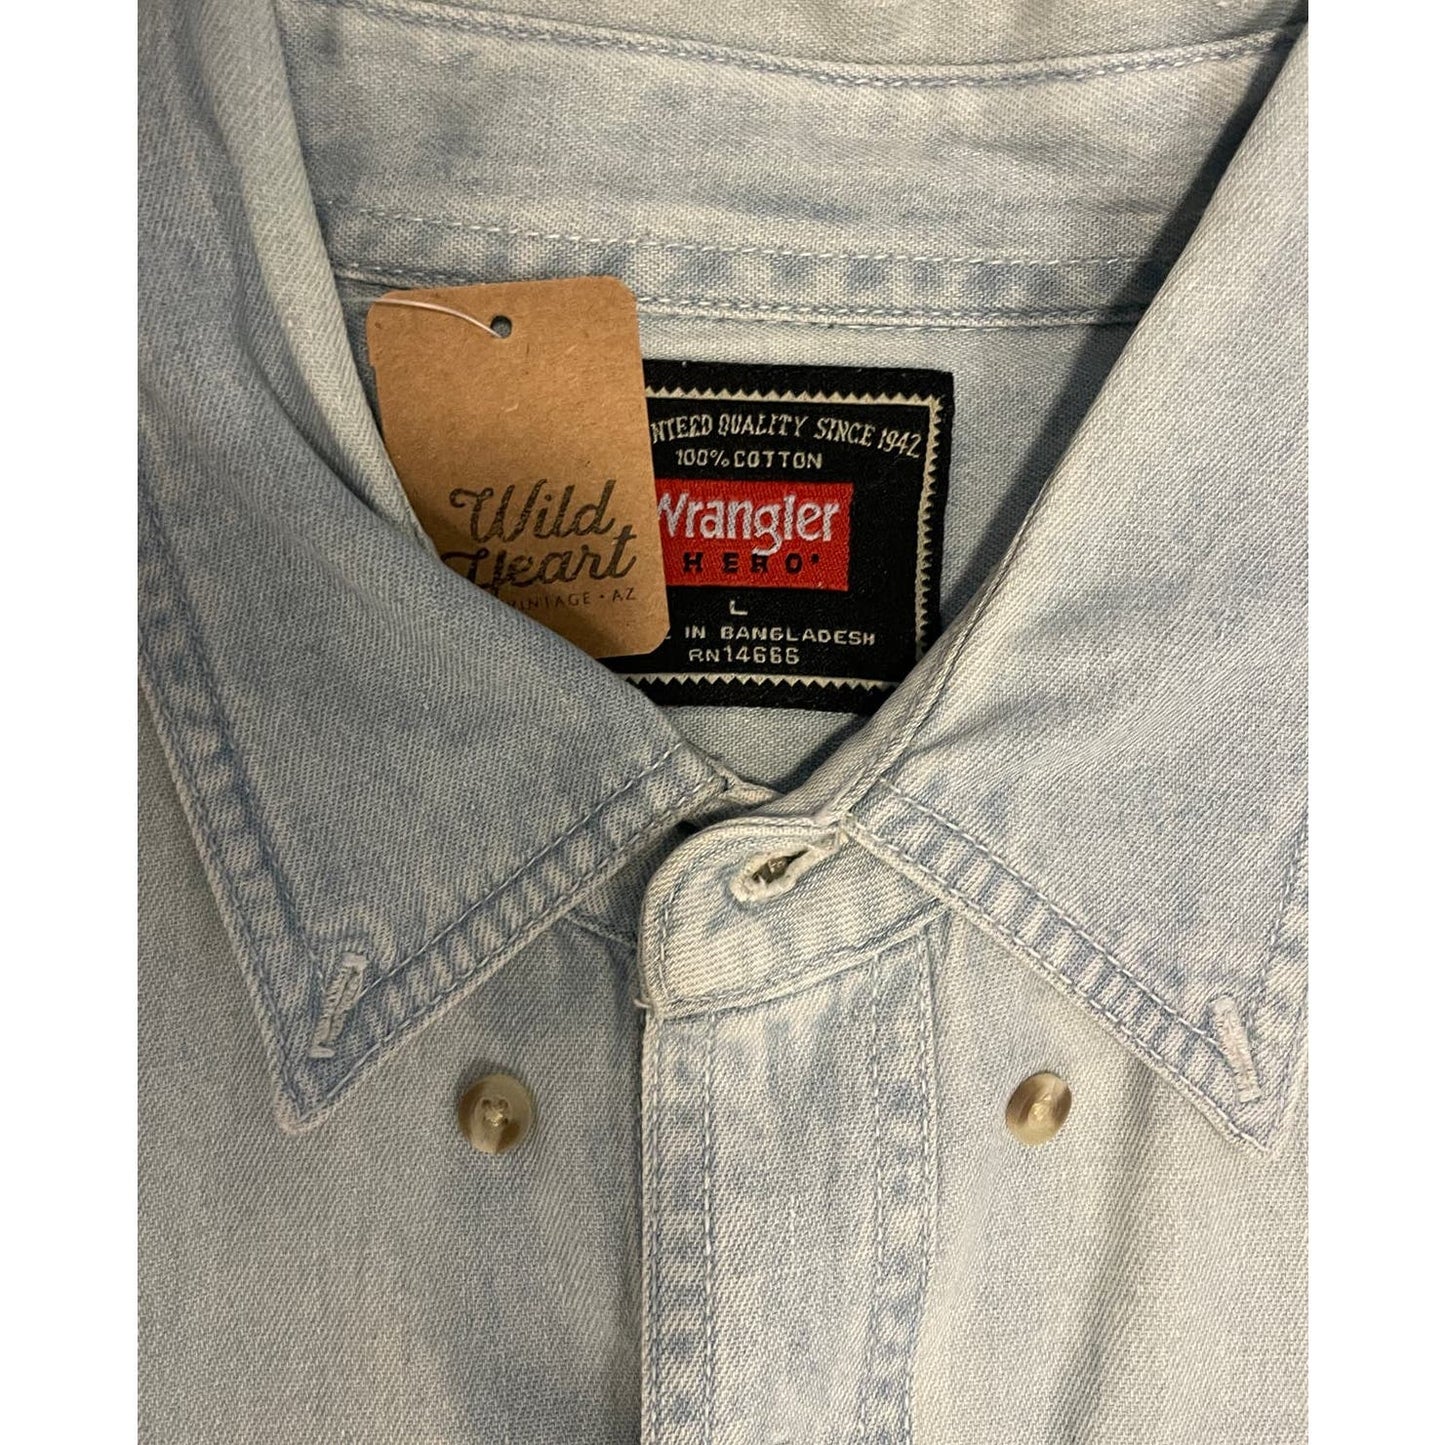 Vintage Denim Wrangler Button Up with Eclipse 500